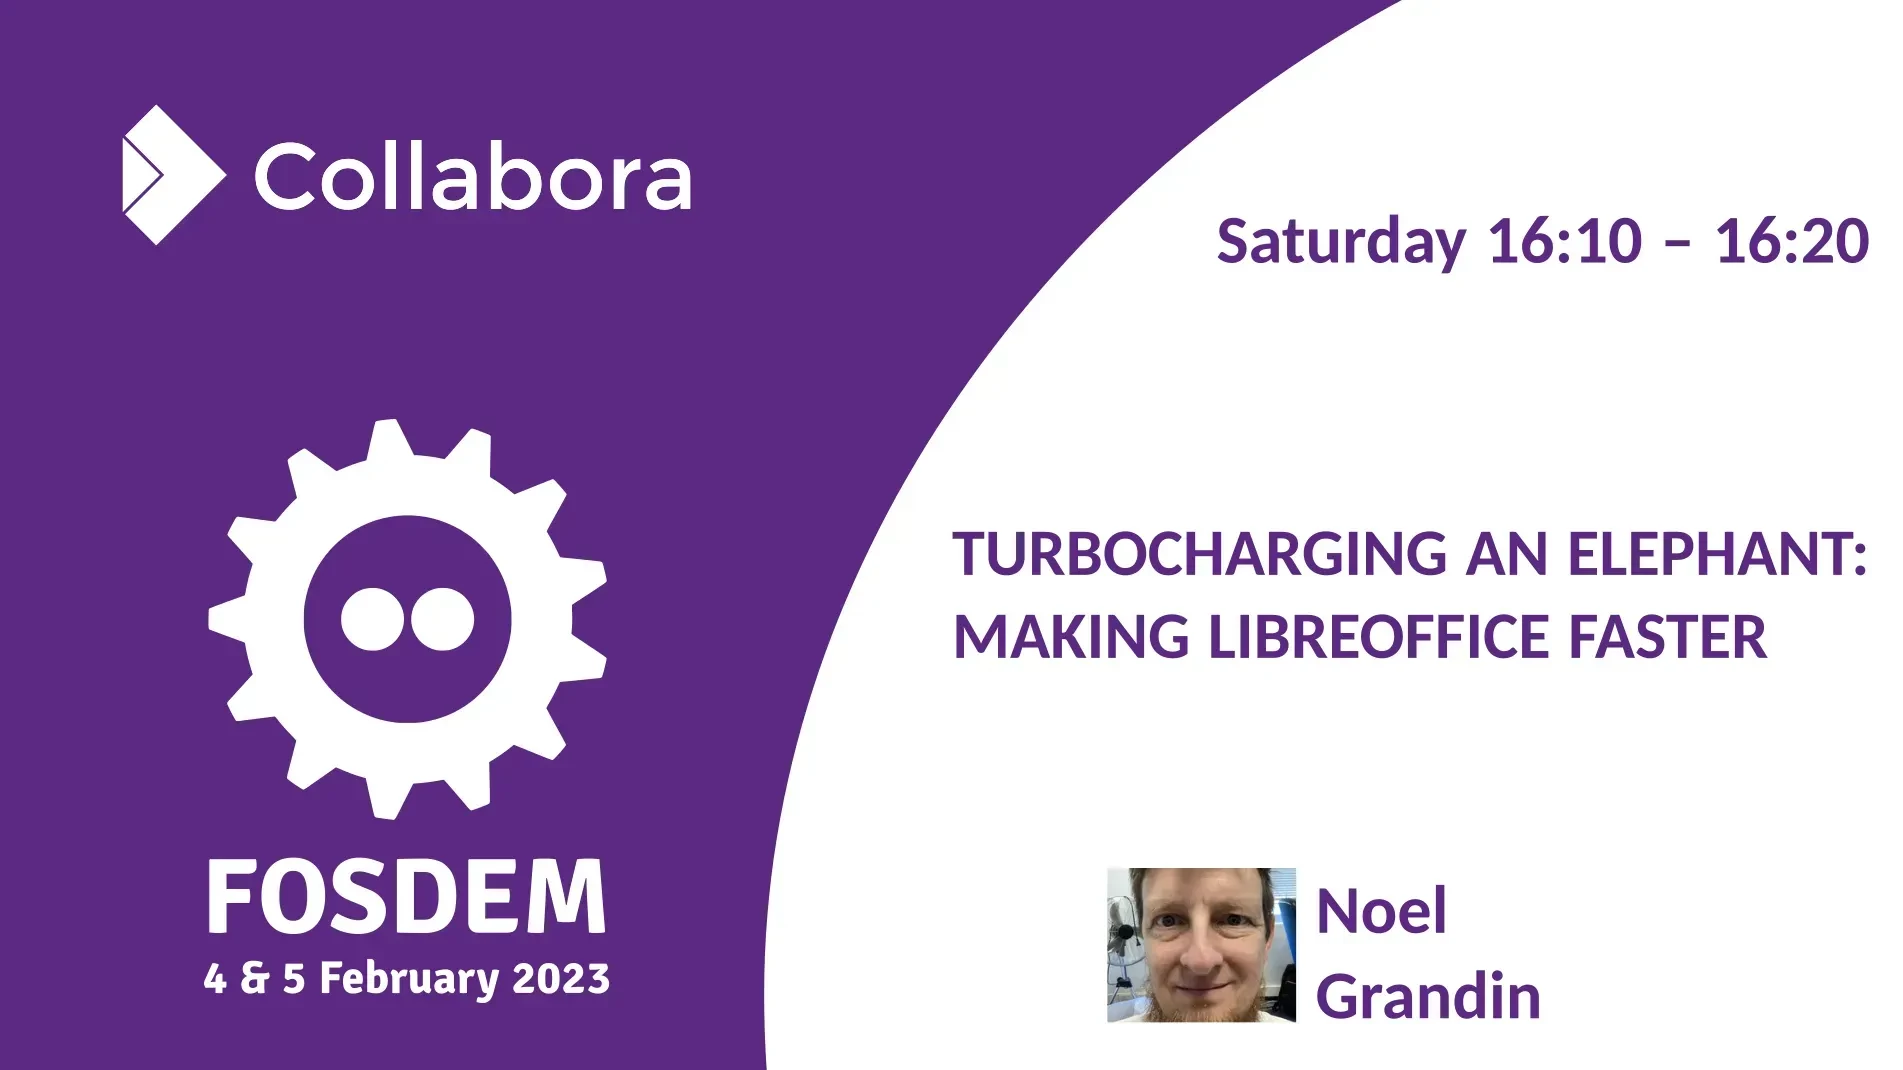 Purple banner promoting Collabora's talk "Turbocharging an elephant. Making Libreoffice faster" Saturday at FOSDEM.